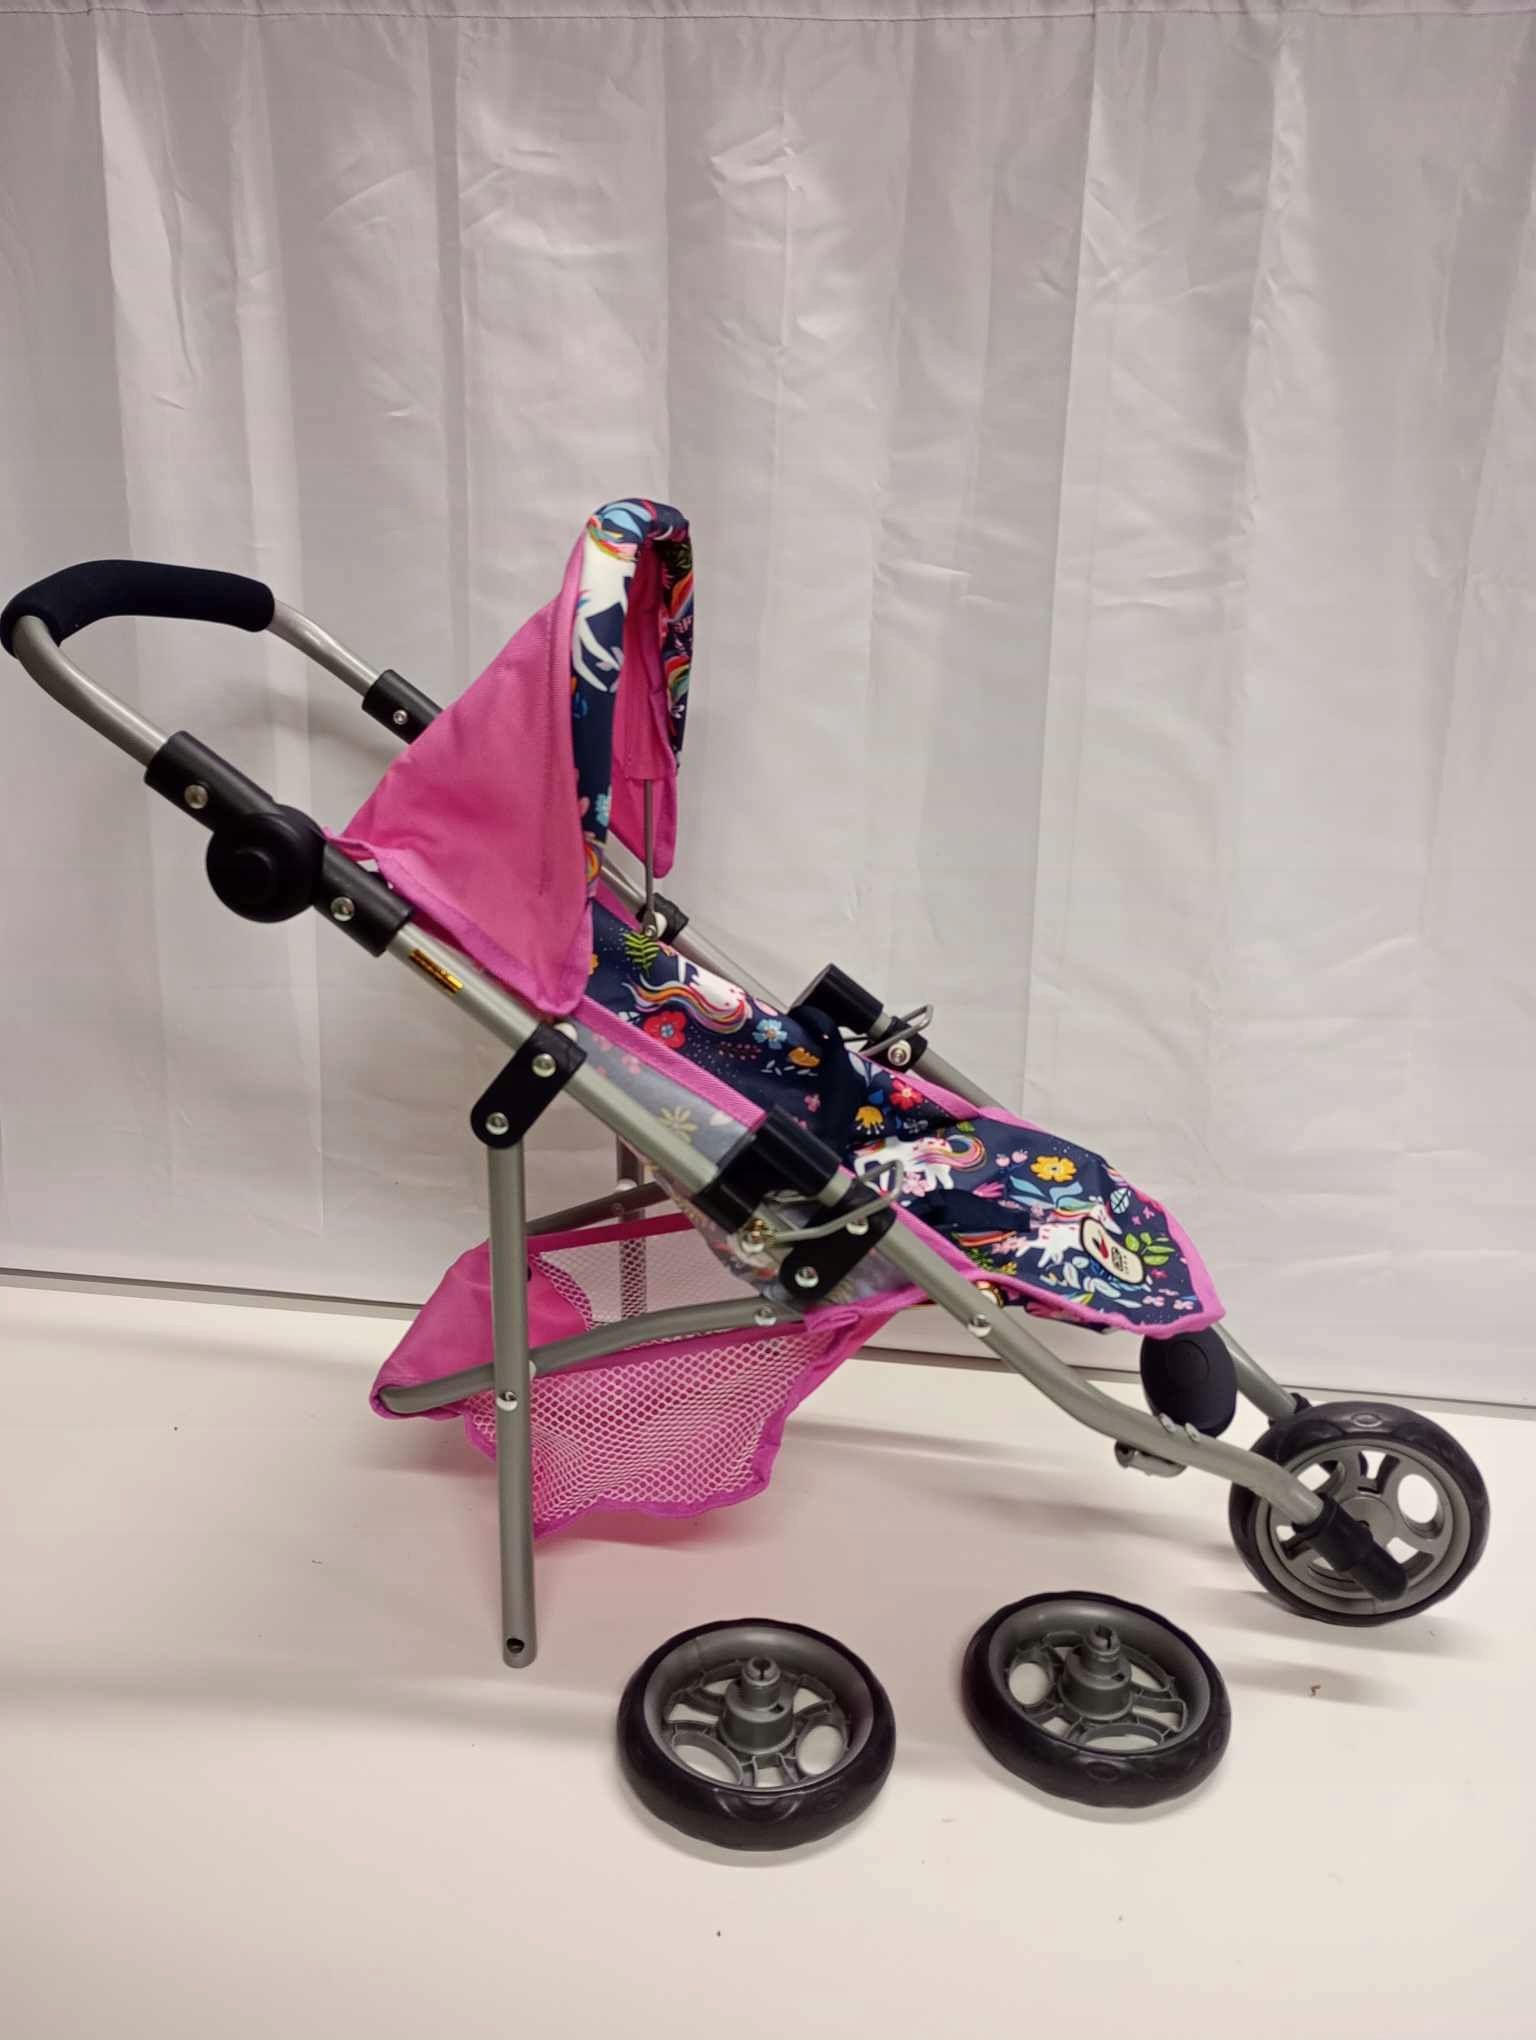 Wózek dla lalki spacerówka Bayer Chic Lola Opis!